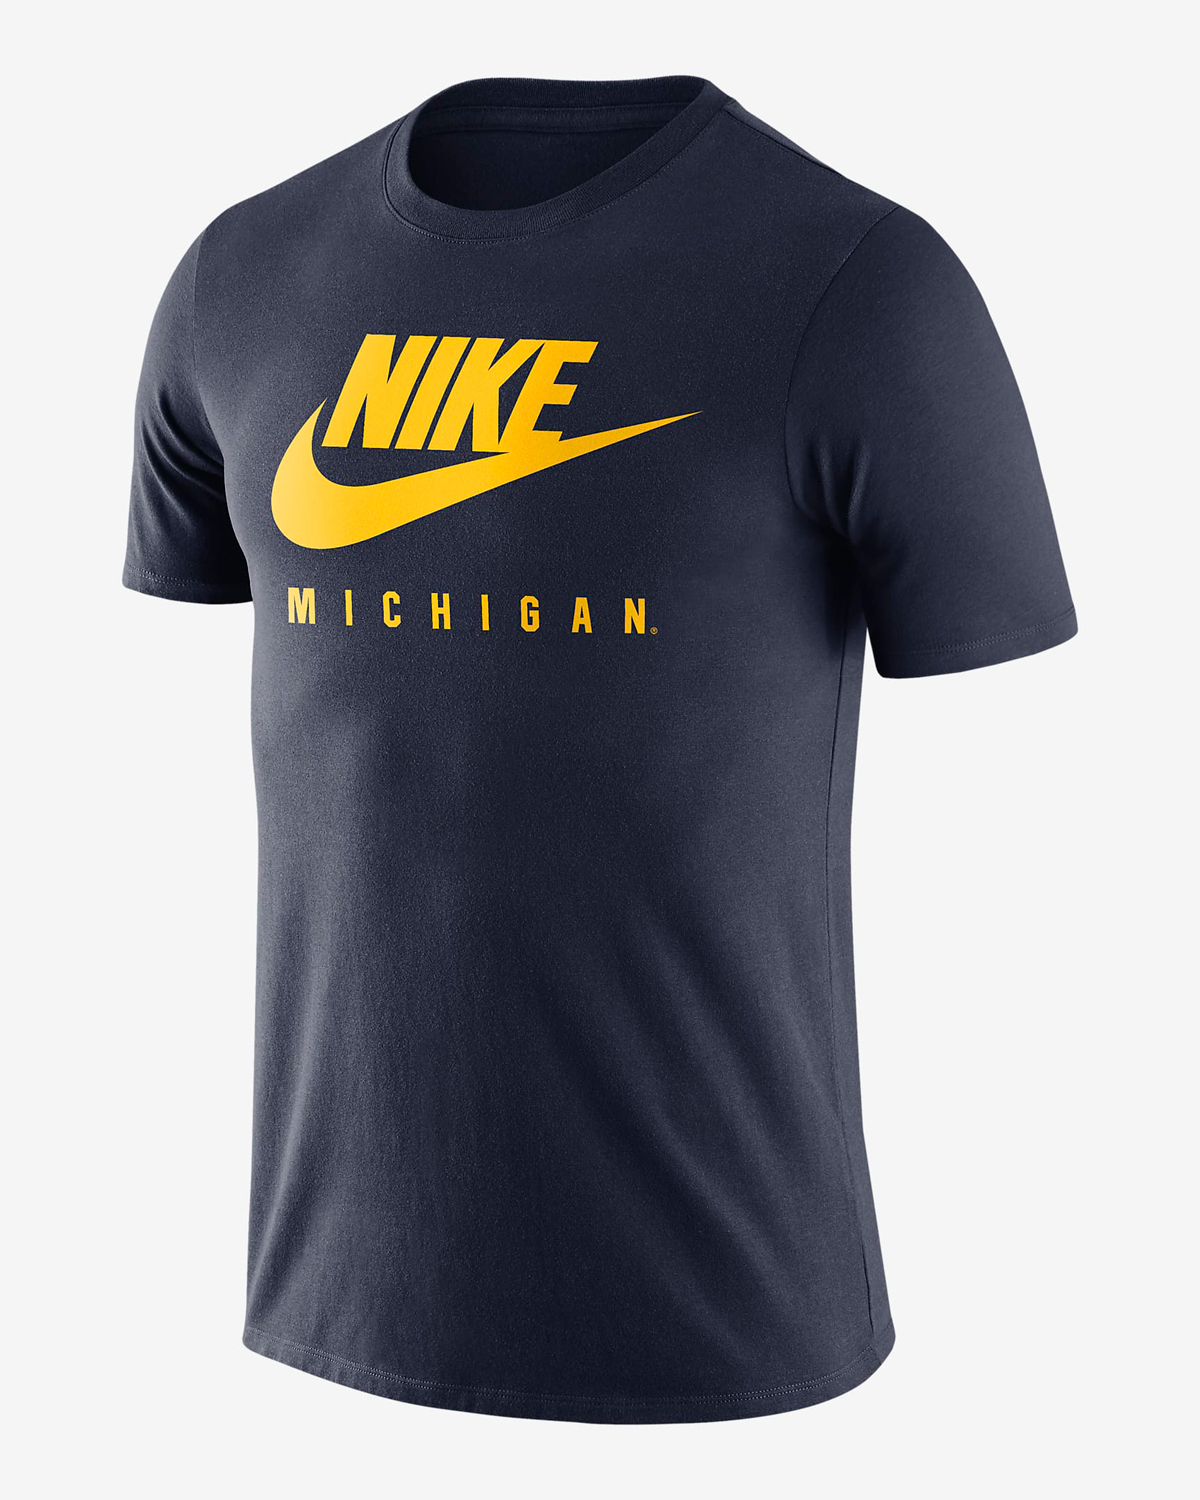 Nike-Michigan-Wolverines-T-Shirt